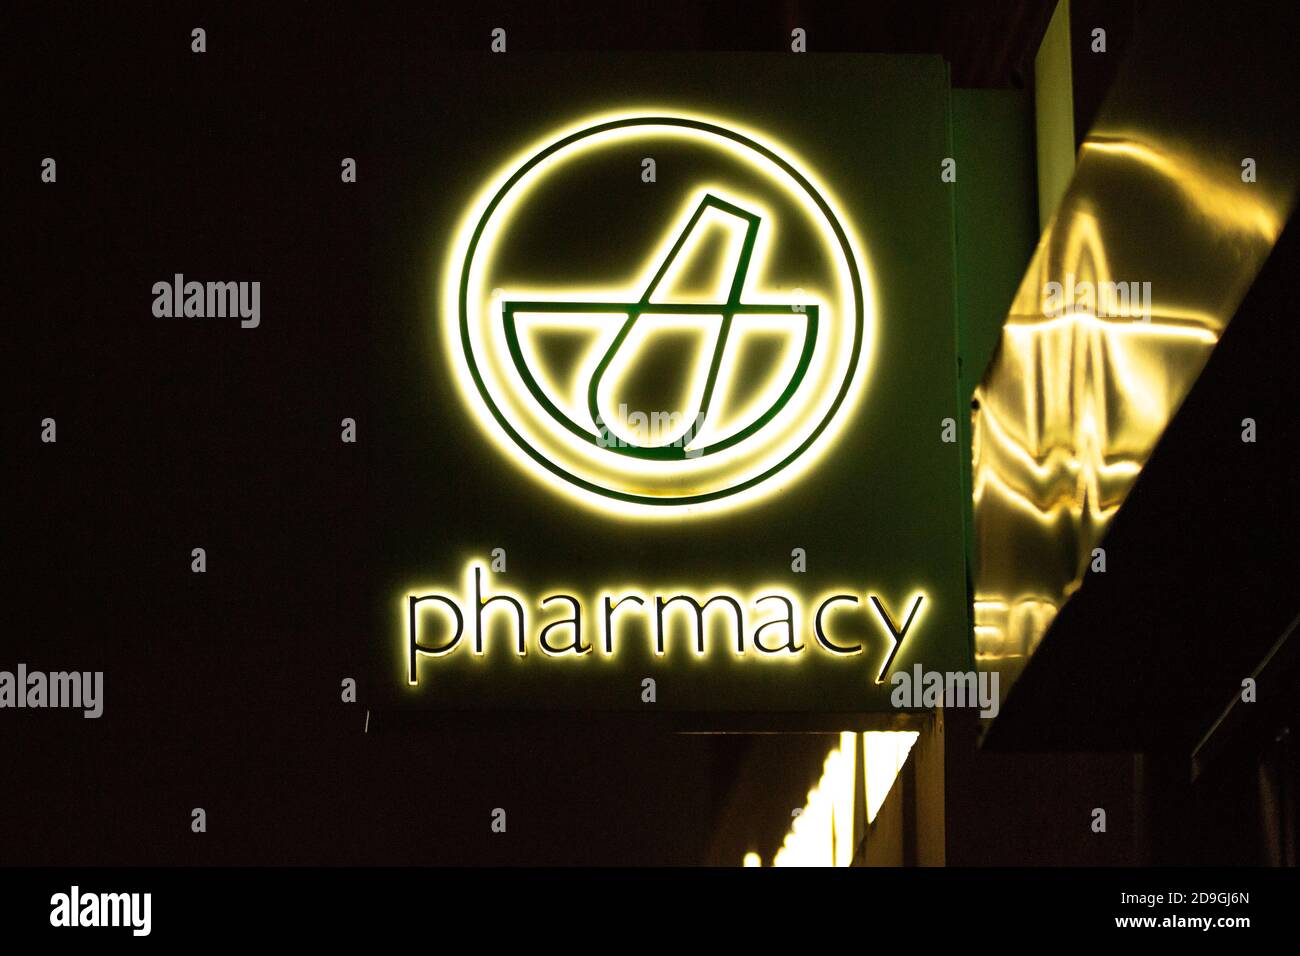 Lloyds Pharmacy (Chemist) sign at night, Birmingham, UK Stock Photo